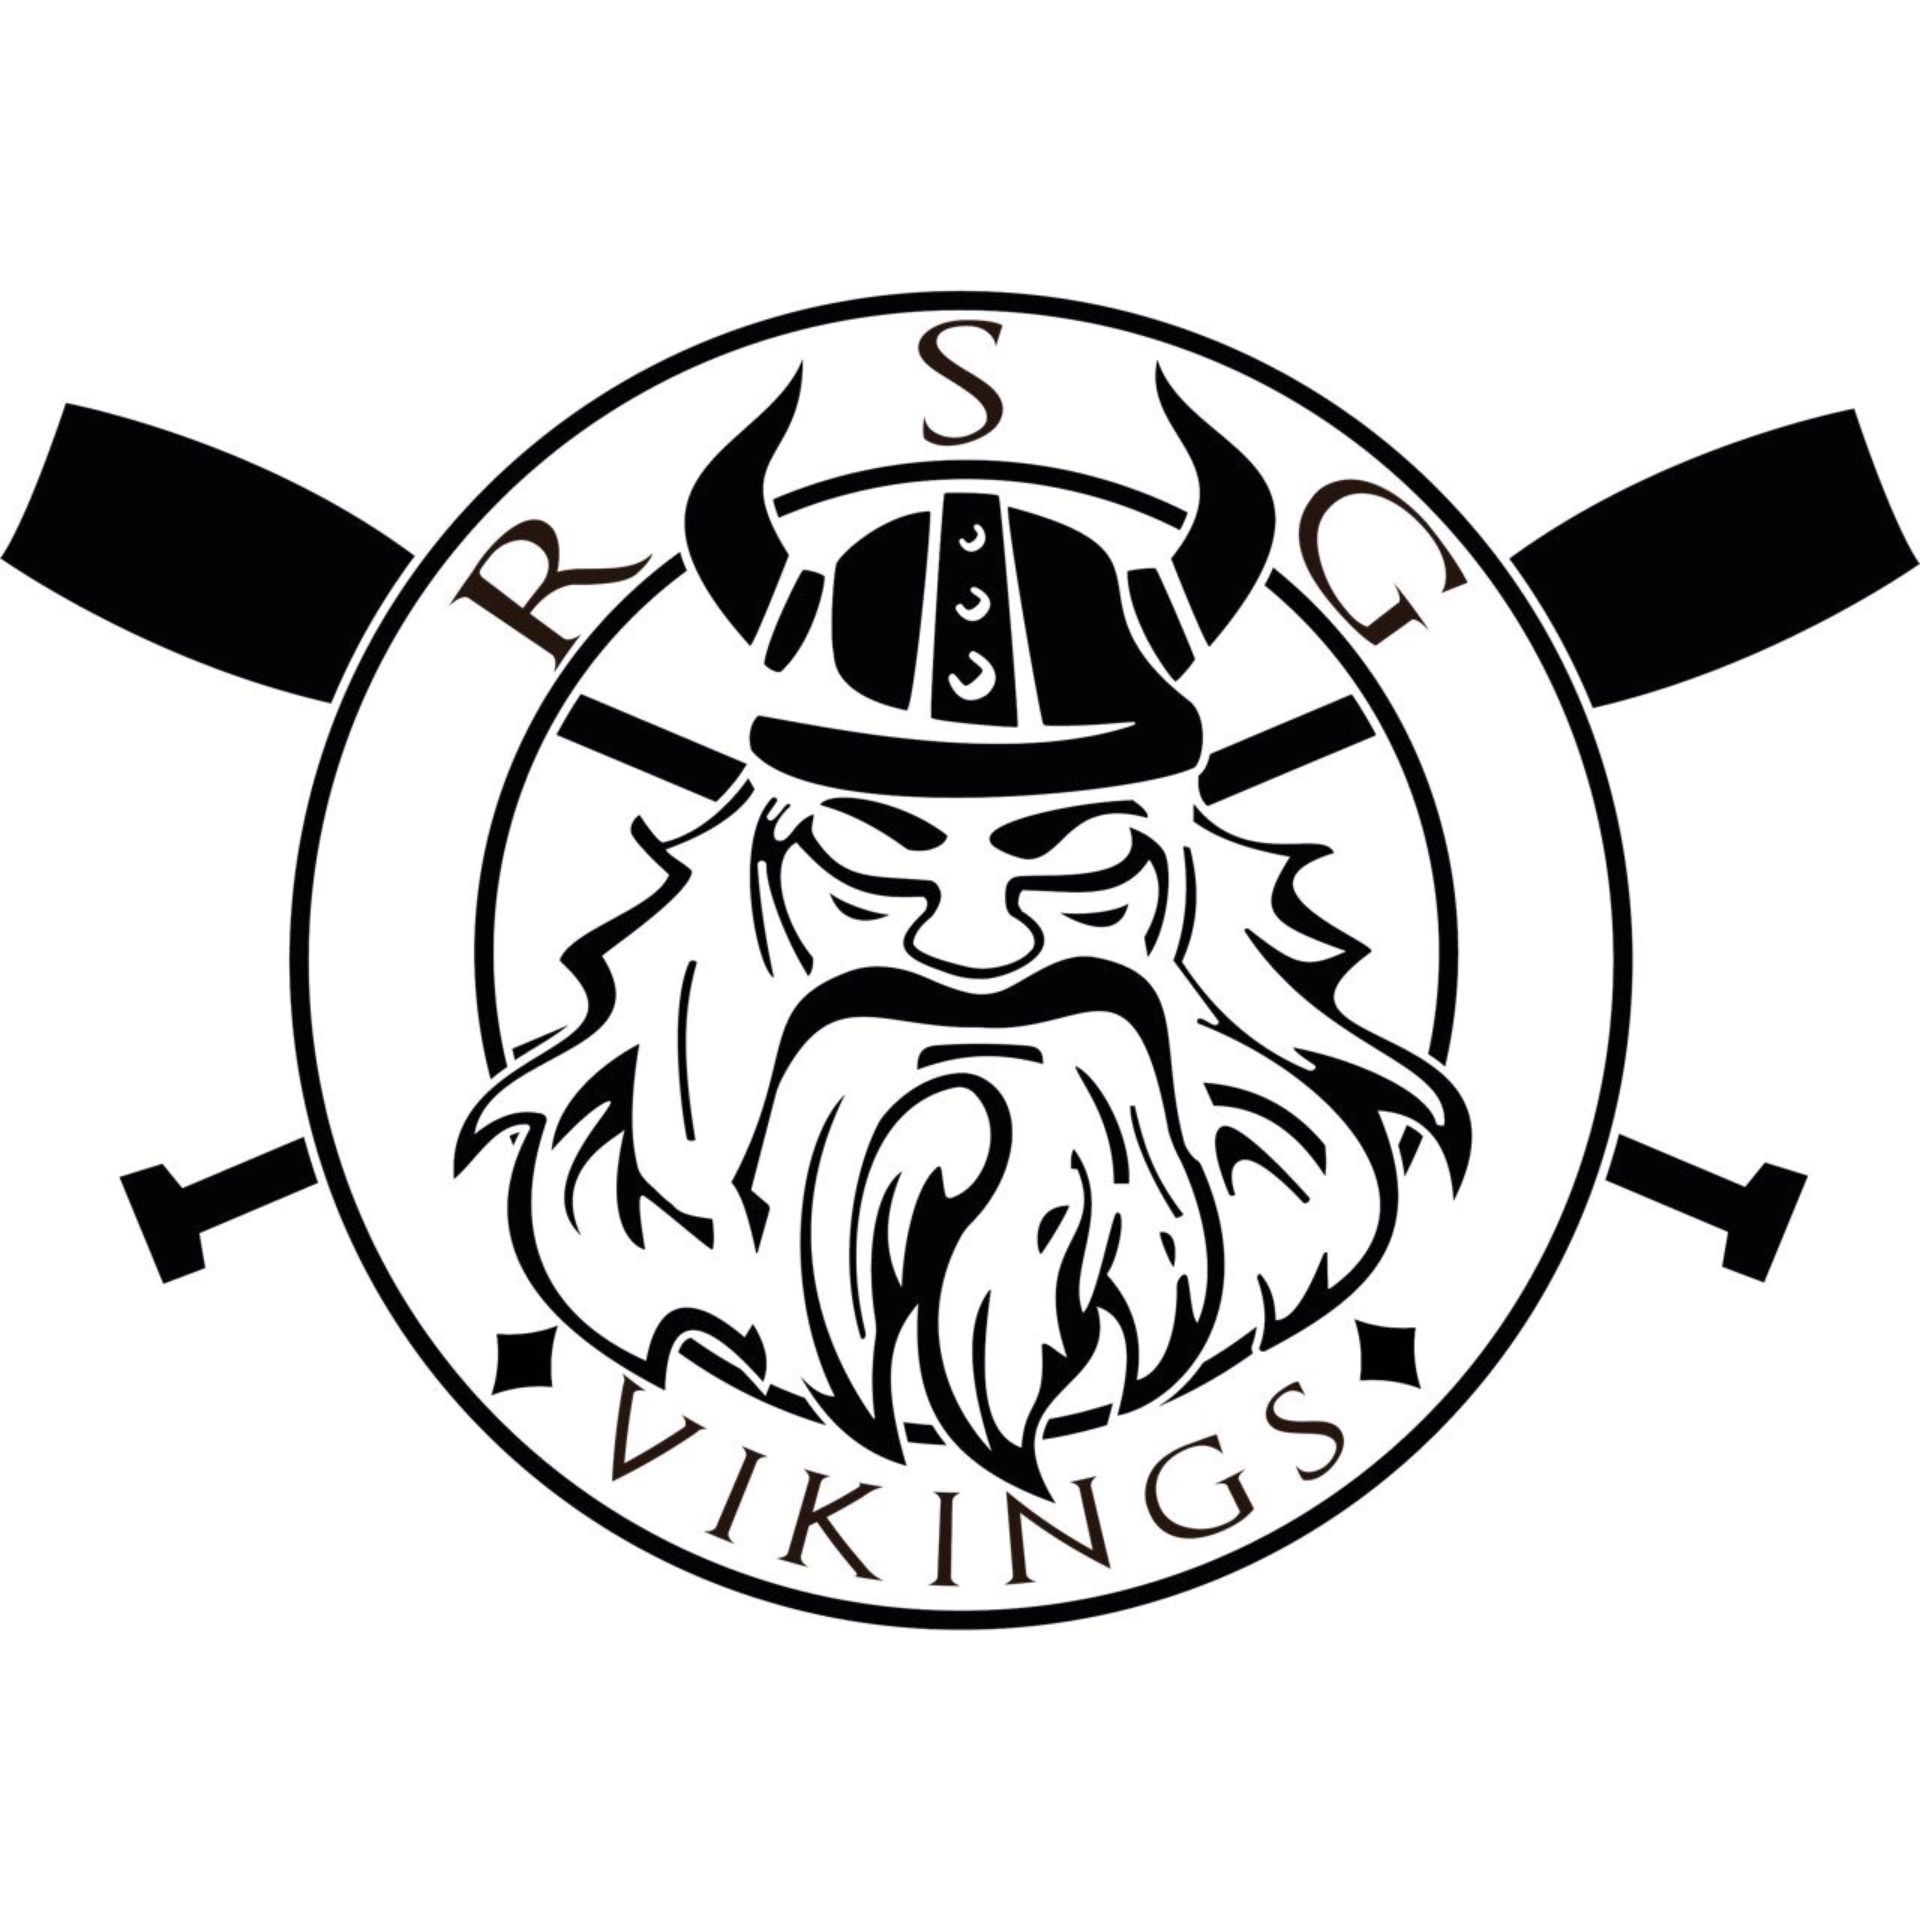 RSG Vikings